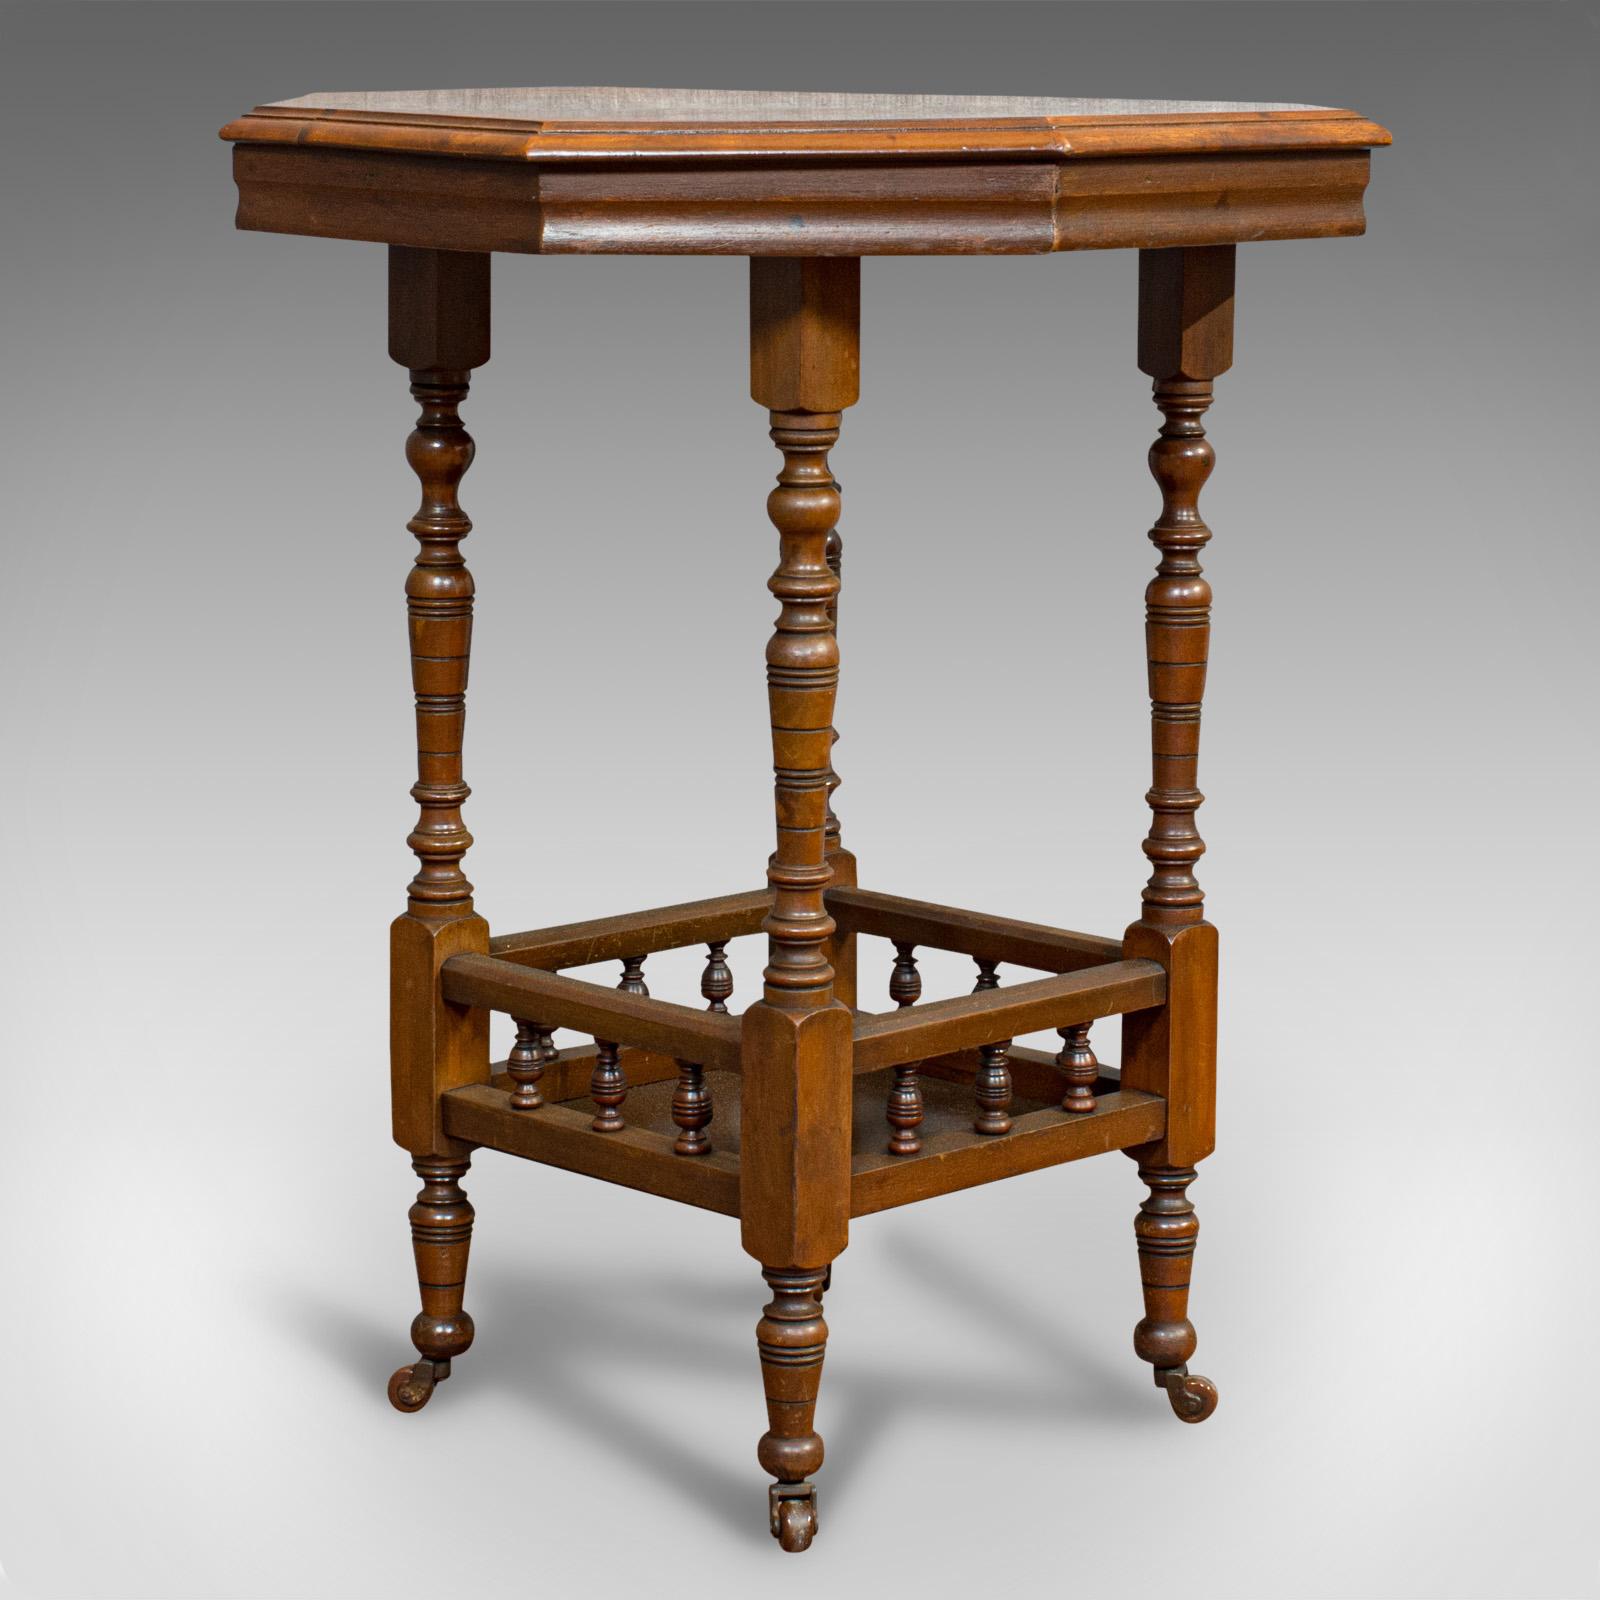 British Antique Lamp Table, English, Walnut, Octagonal, Side, Games, Edwardian